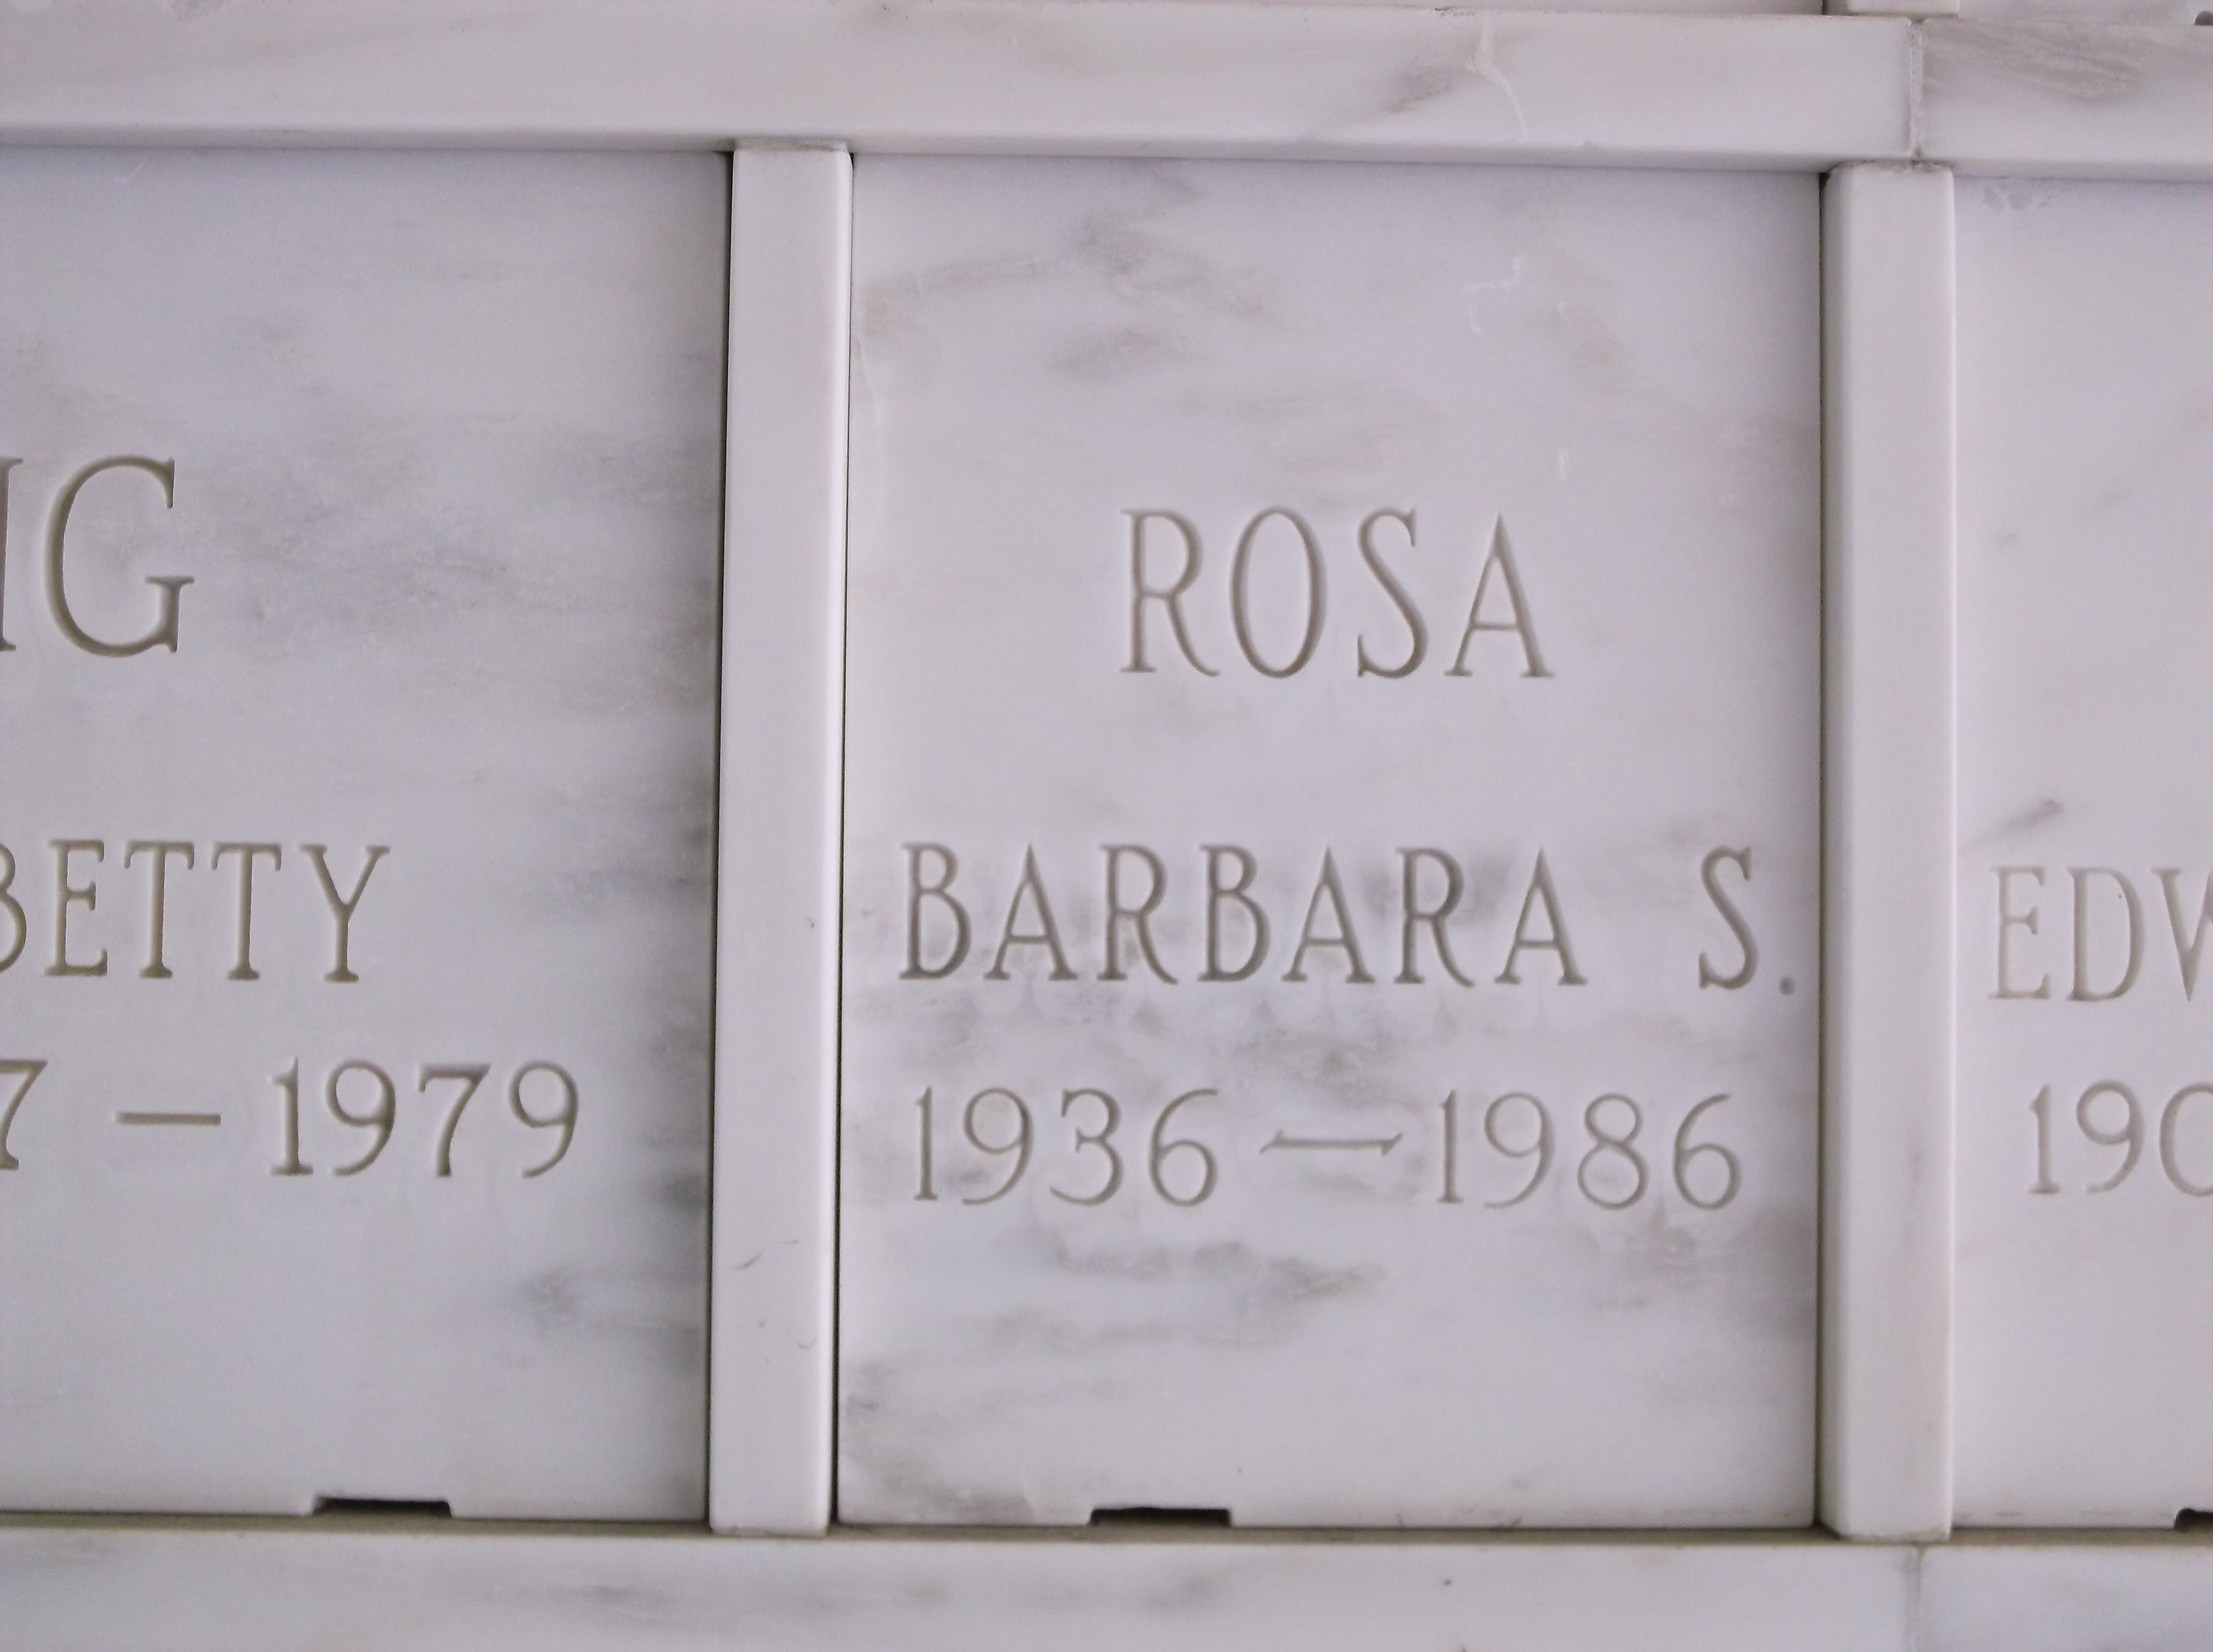 Barbara S Rosa